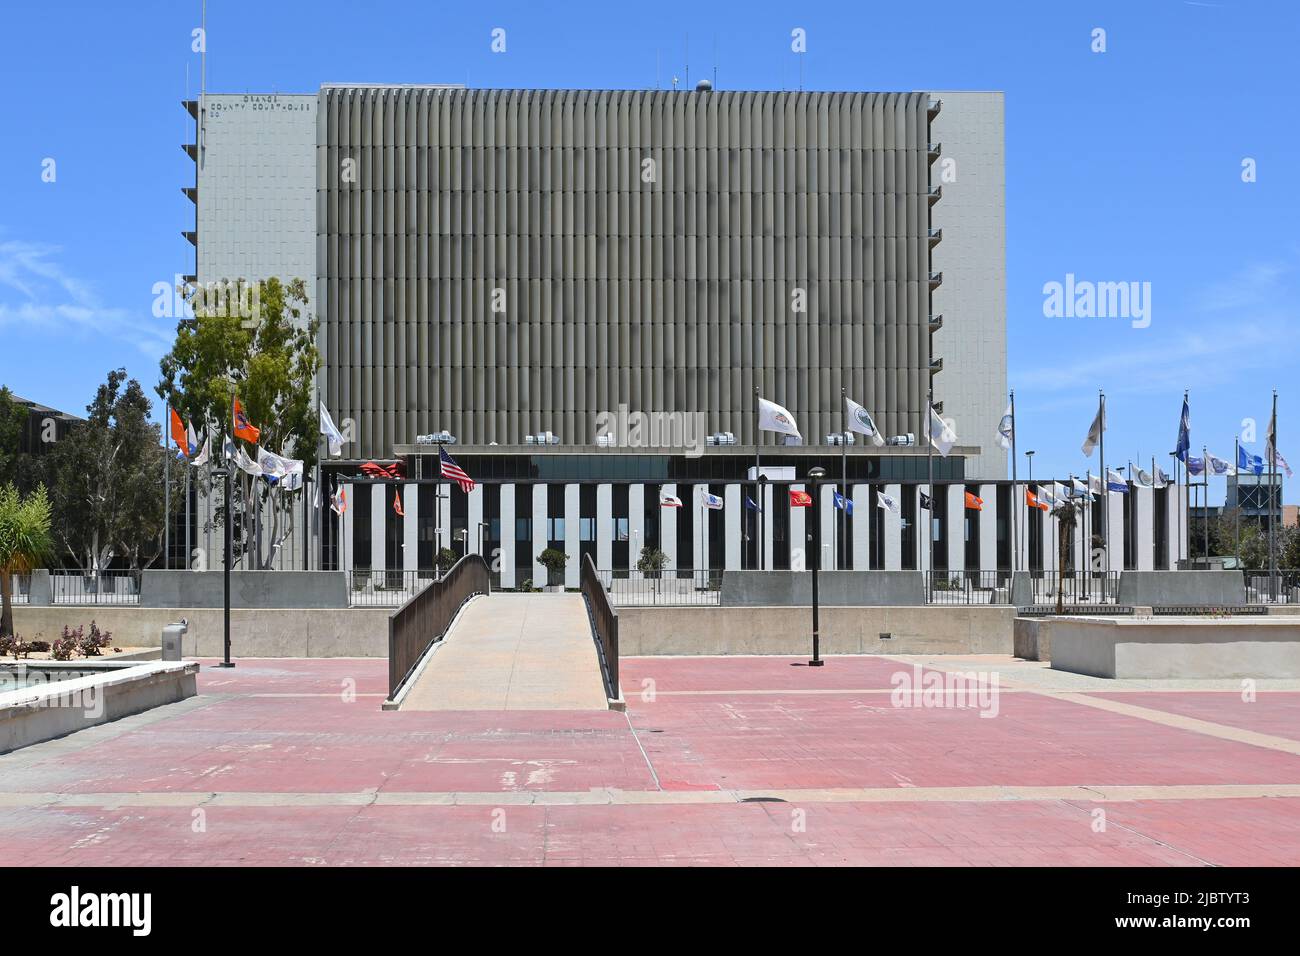 SANTA ANA, CALIFORNIA - 2 JUNE 2022: The Orange County Courthouse in the Civic Center Plaza. Stock Photo